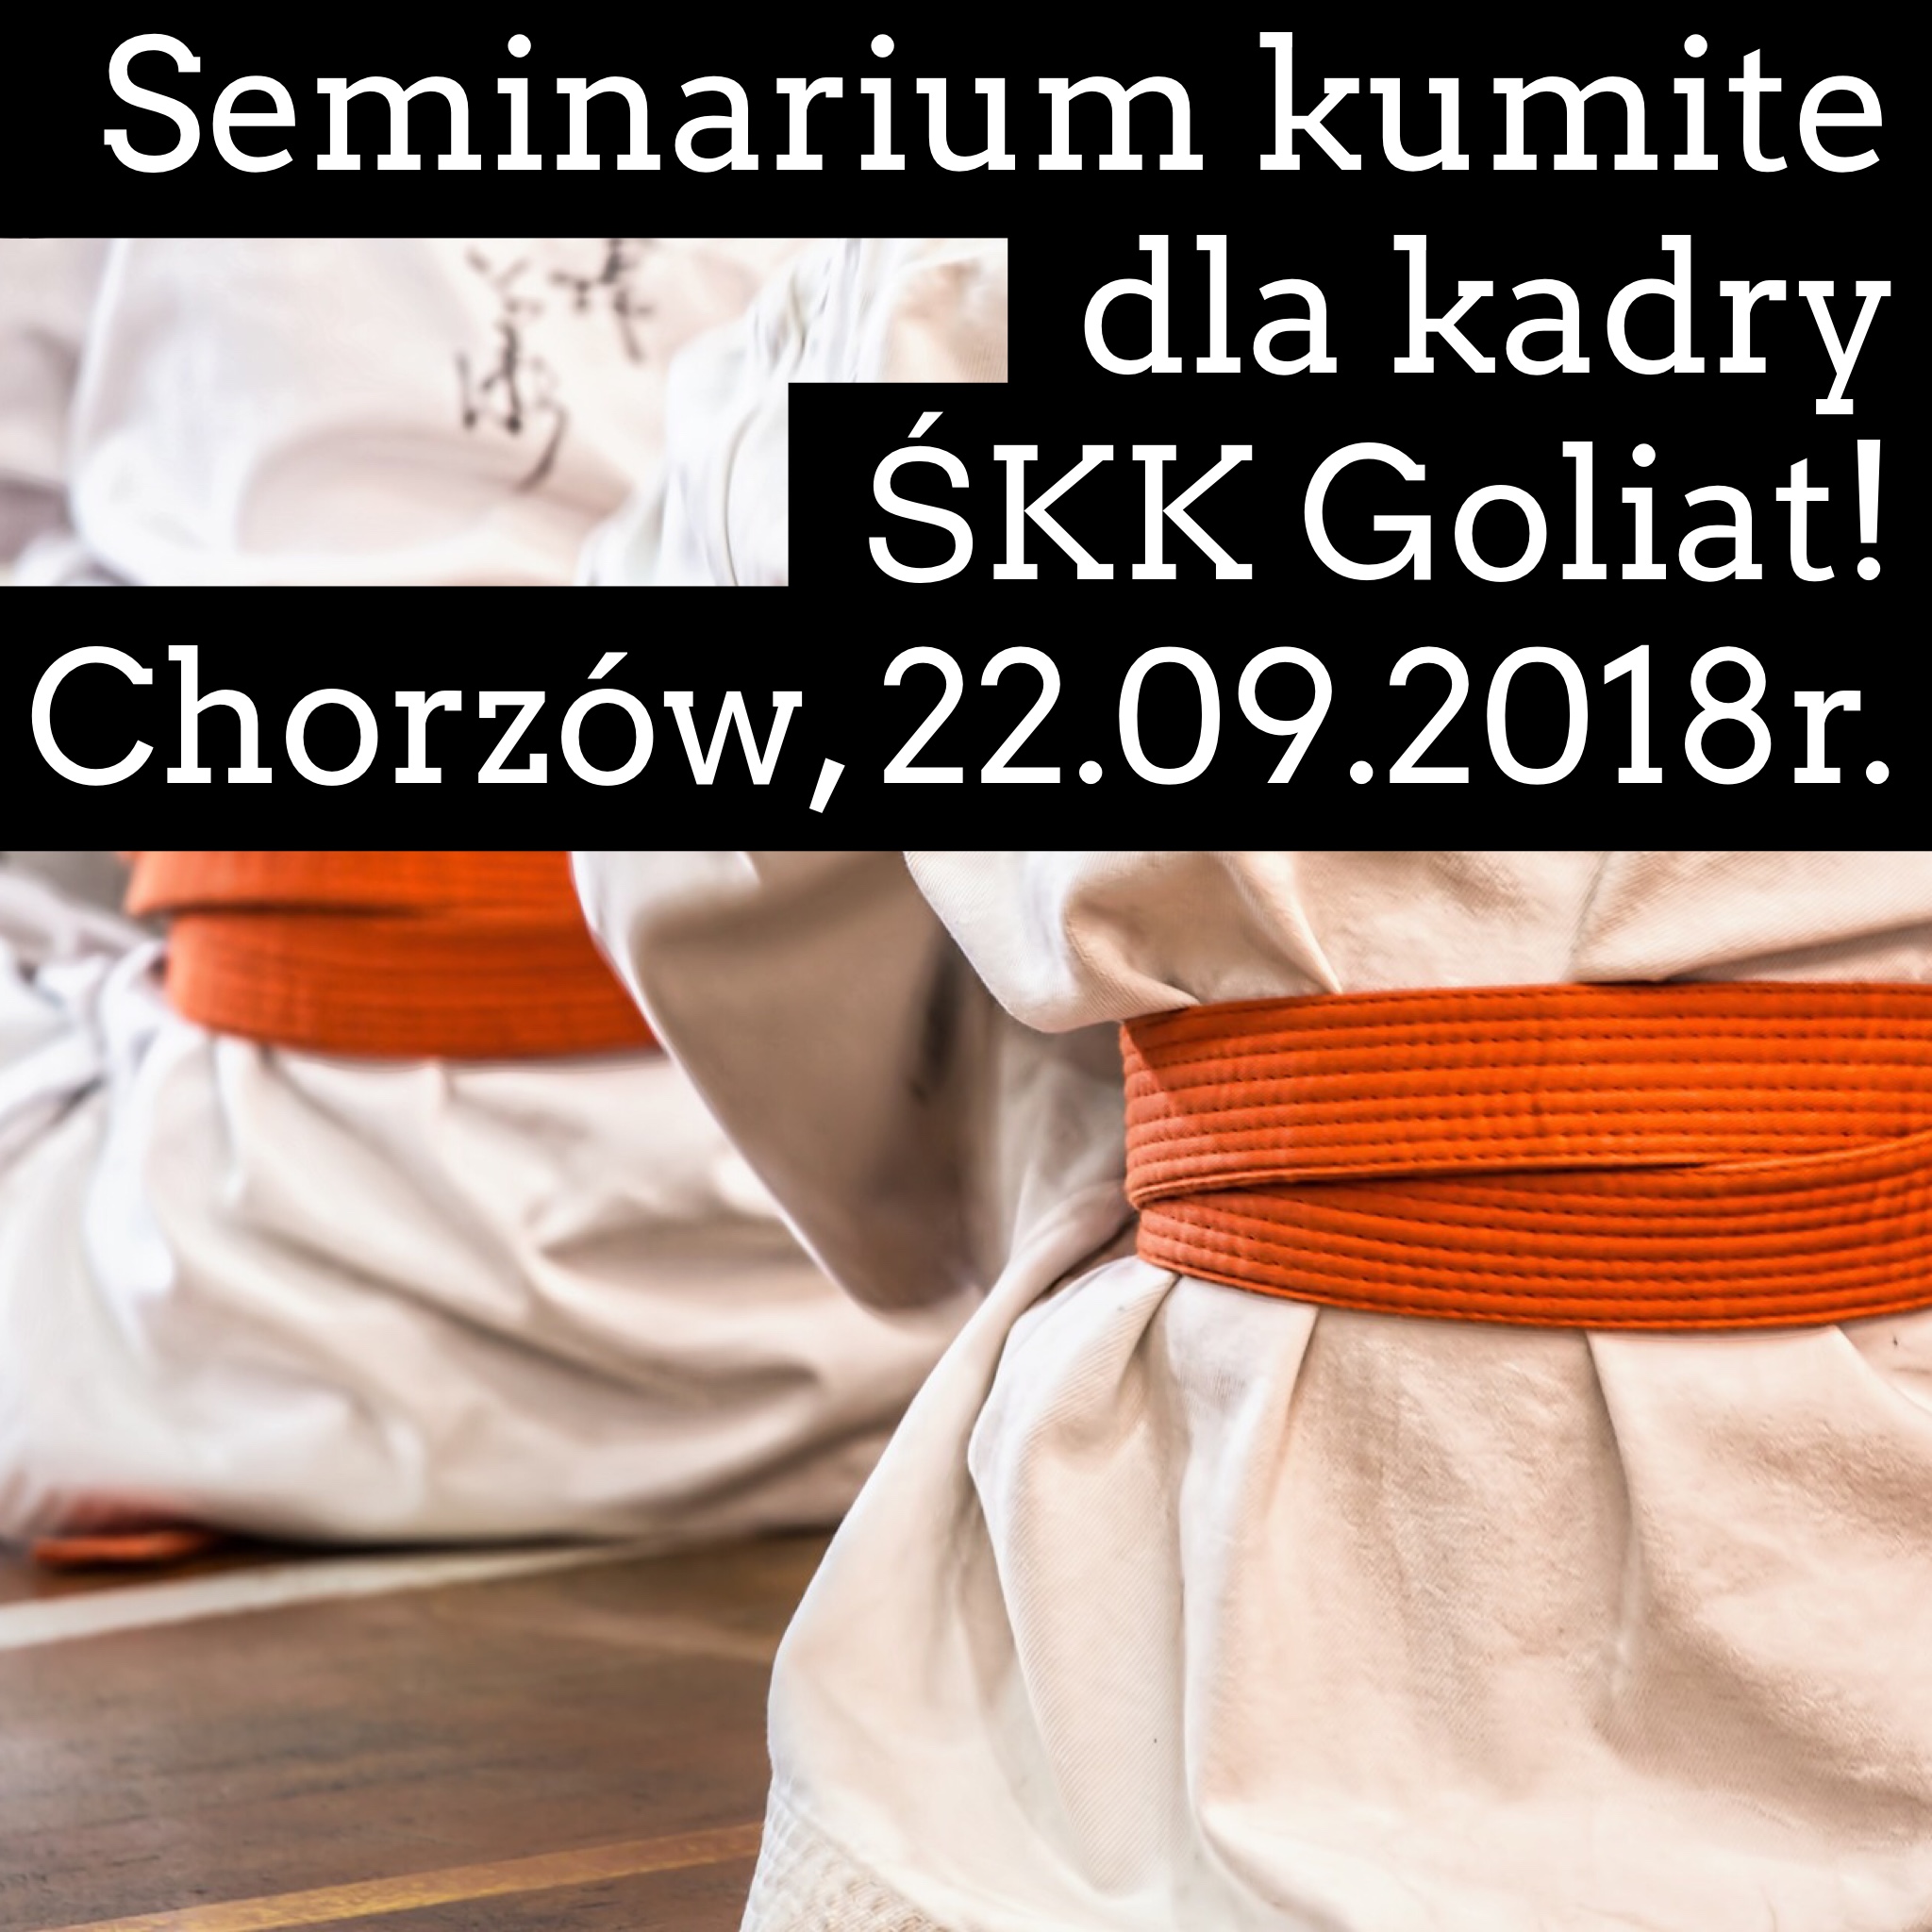 Seminarium kumite dla kadry ŚKK "GOLIAT" (22.09.2018r.)